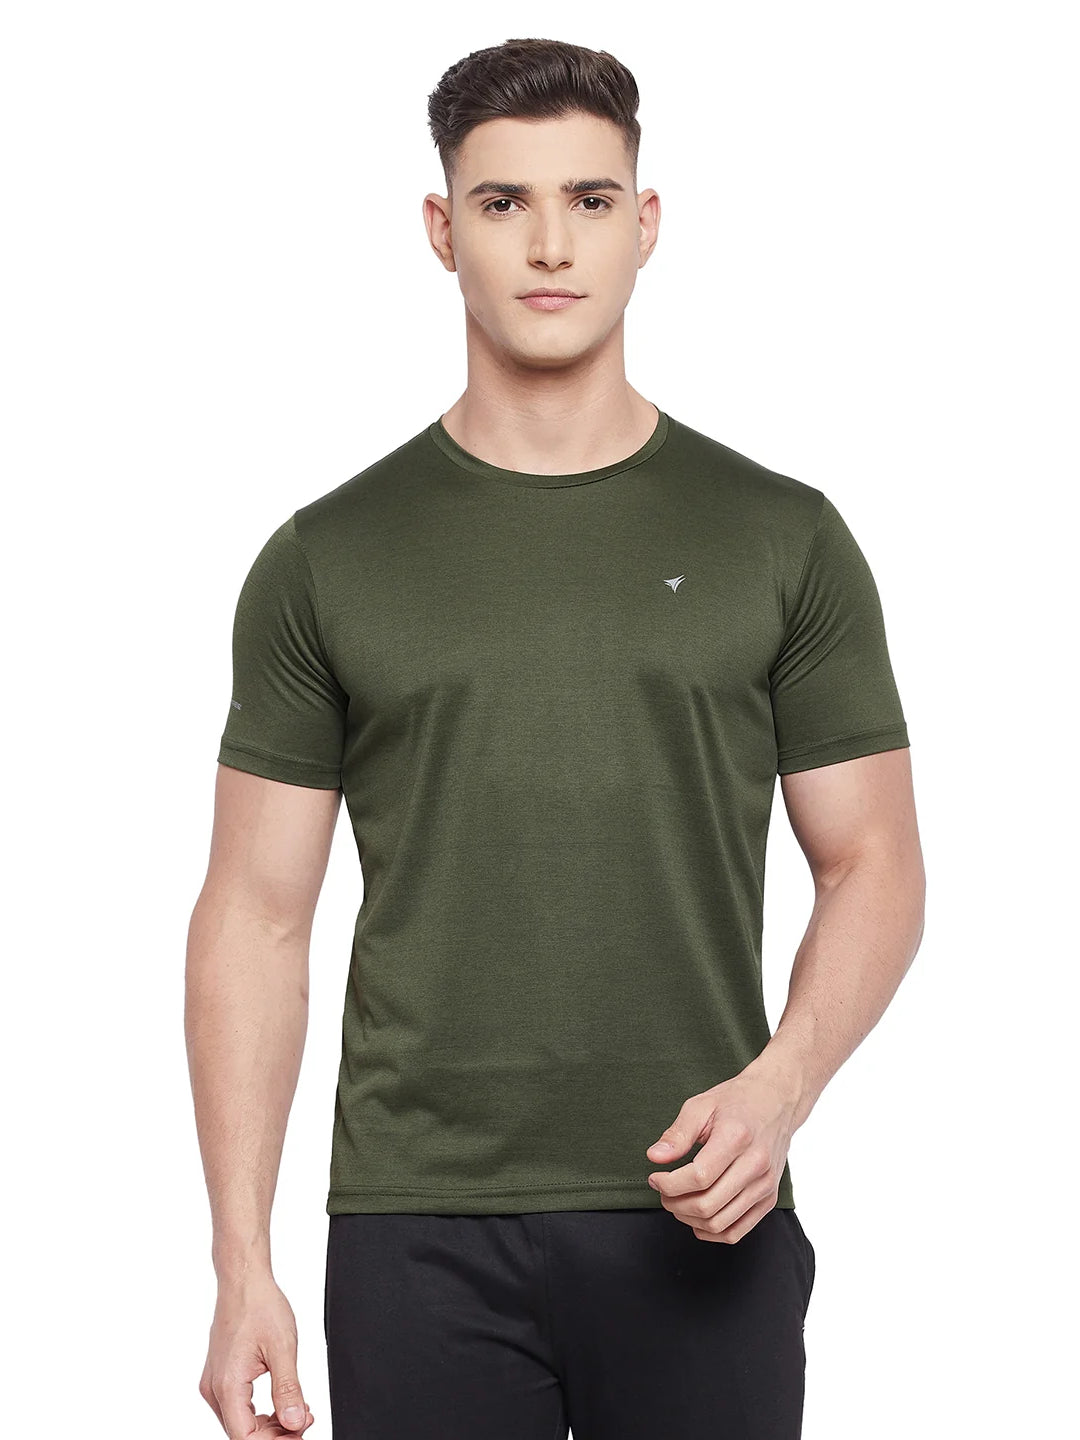 Neva Men Round Neck Half Sleeve Sports wear T-shirt- Olive